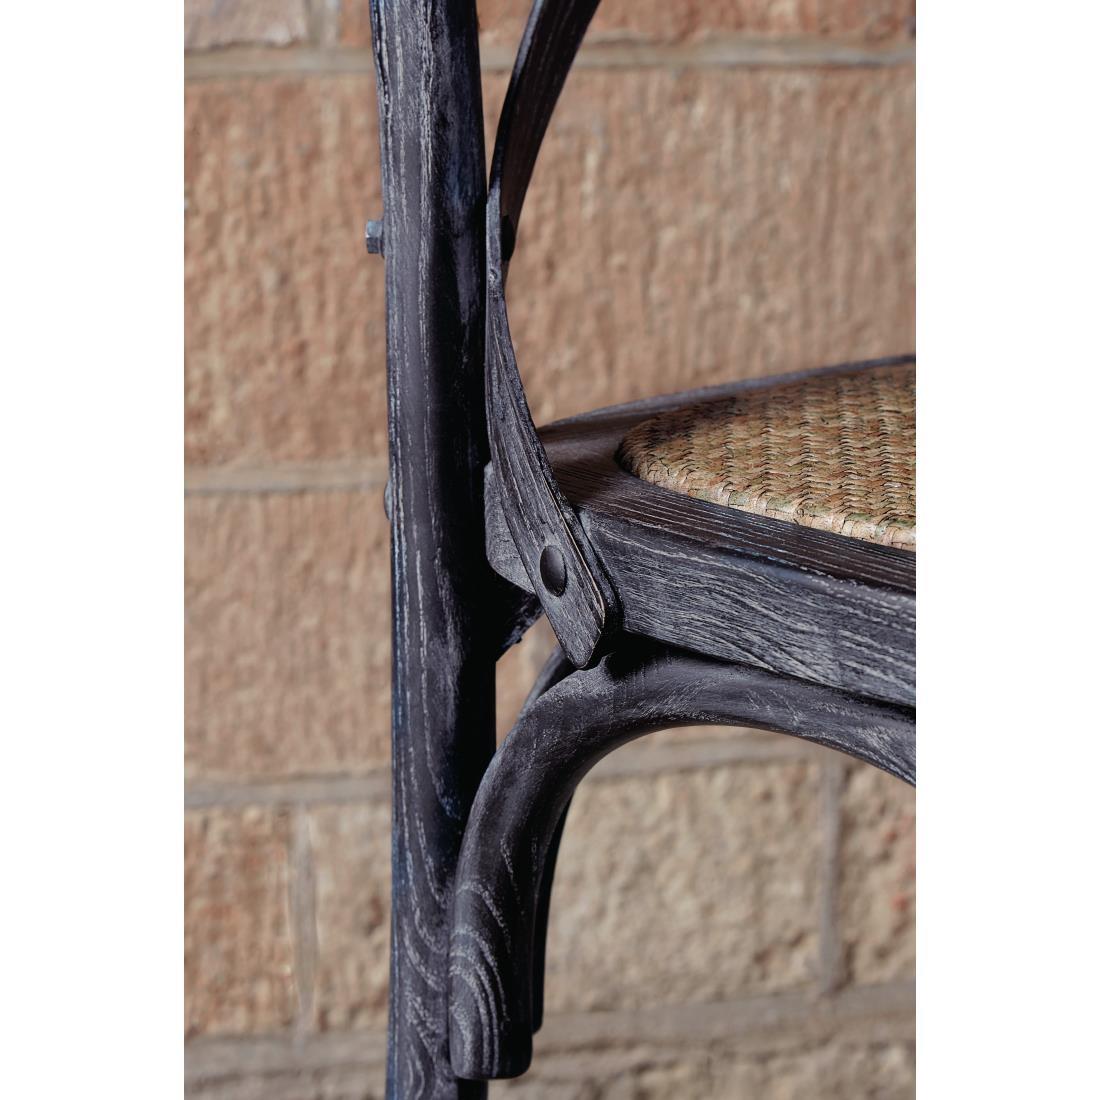 GG654 - Bolero Wooden Dining Chair with Cross Backrest Black Wash Finish (Box 2) - GG654  - 8